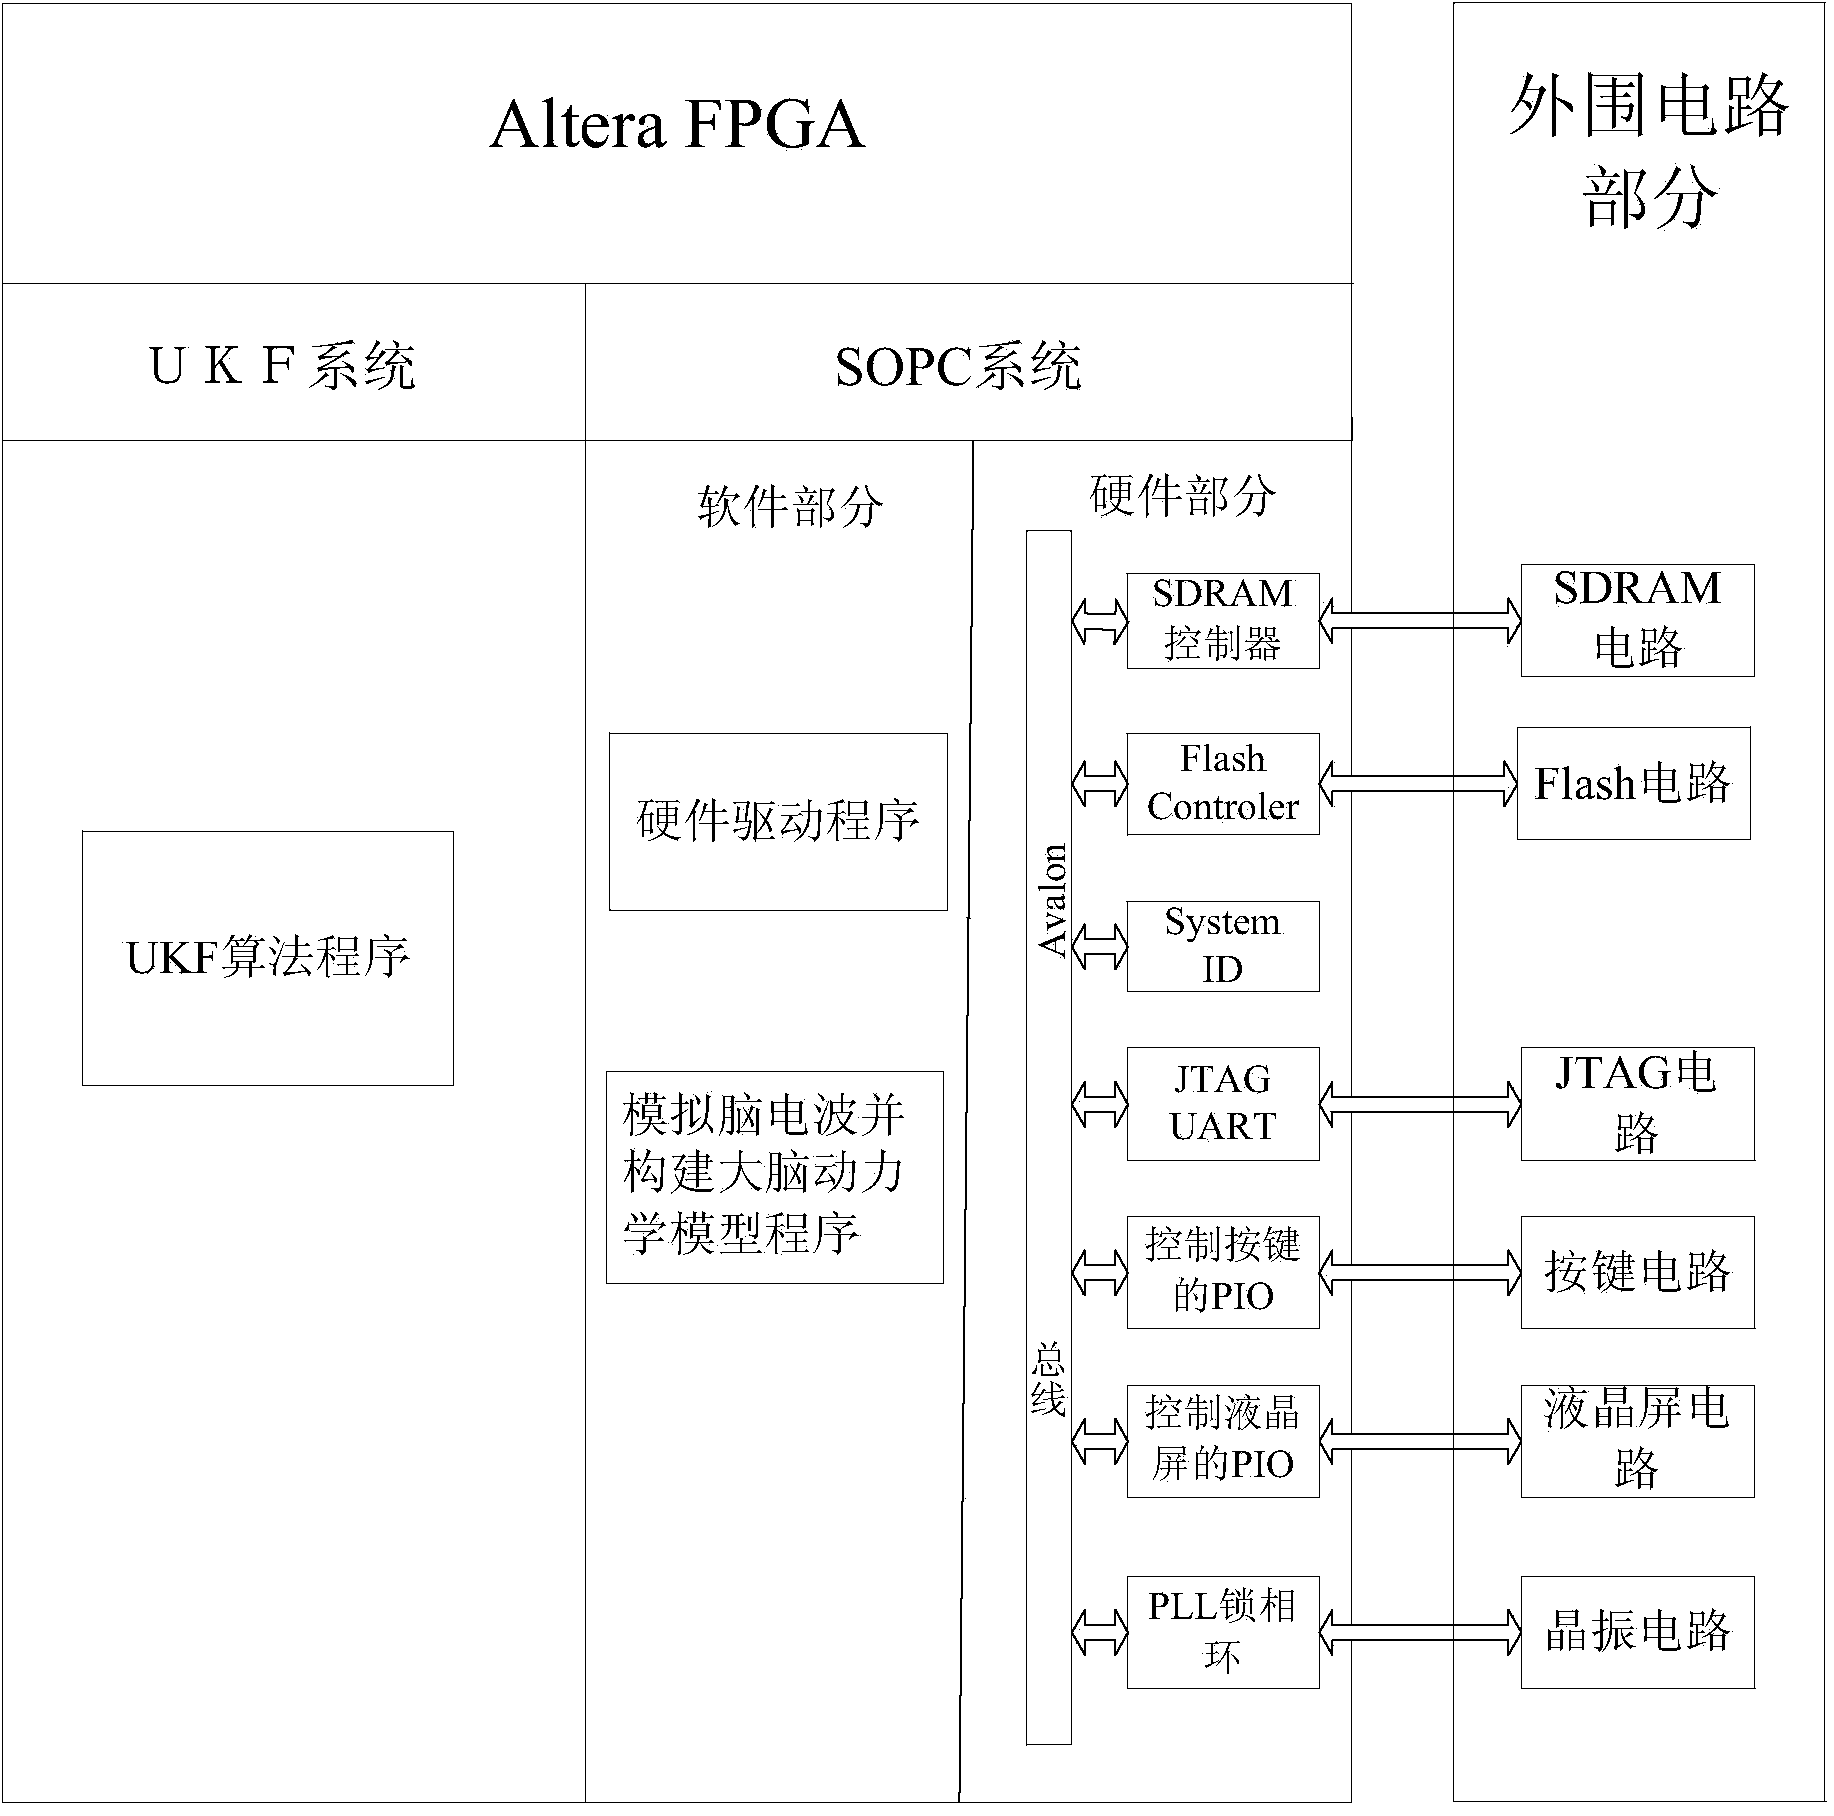 FPGA (field programmable gate array)-based UKF (unscented Kalman filter) algorithm and filtering on brain dynamics model by FPGA-based UKF algorithm